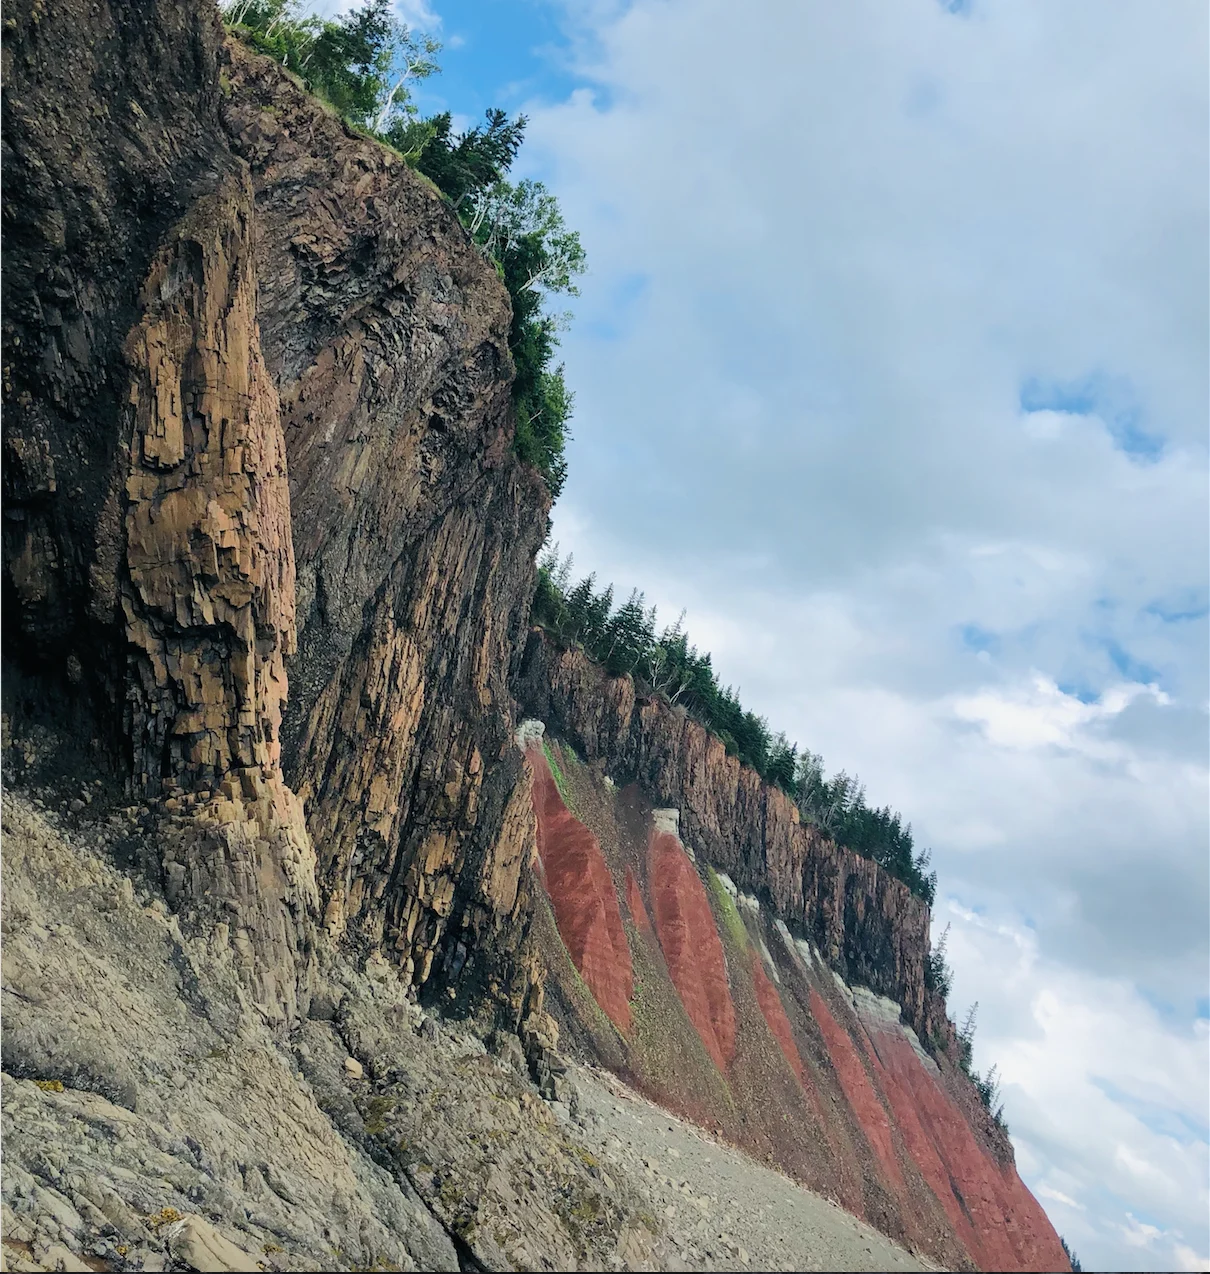 UGC: Cliffs of Fundy, Nova Scotia (Nathan Coleman)